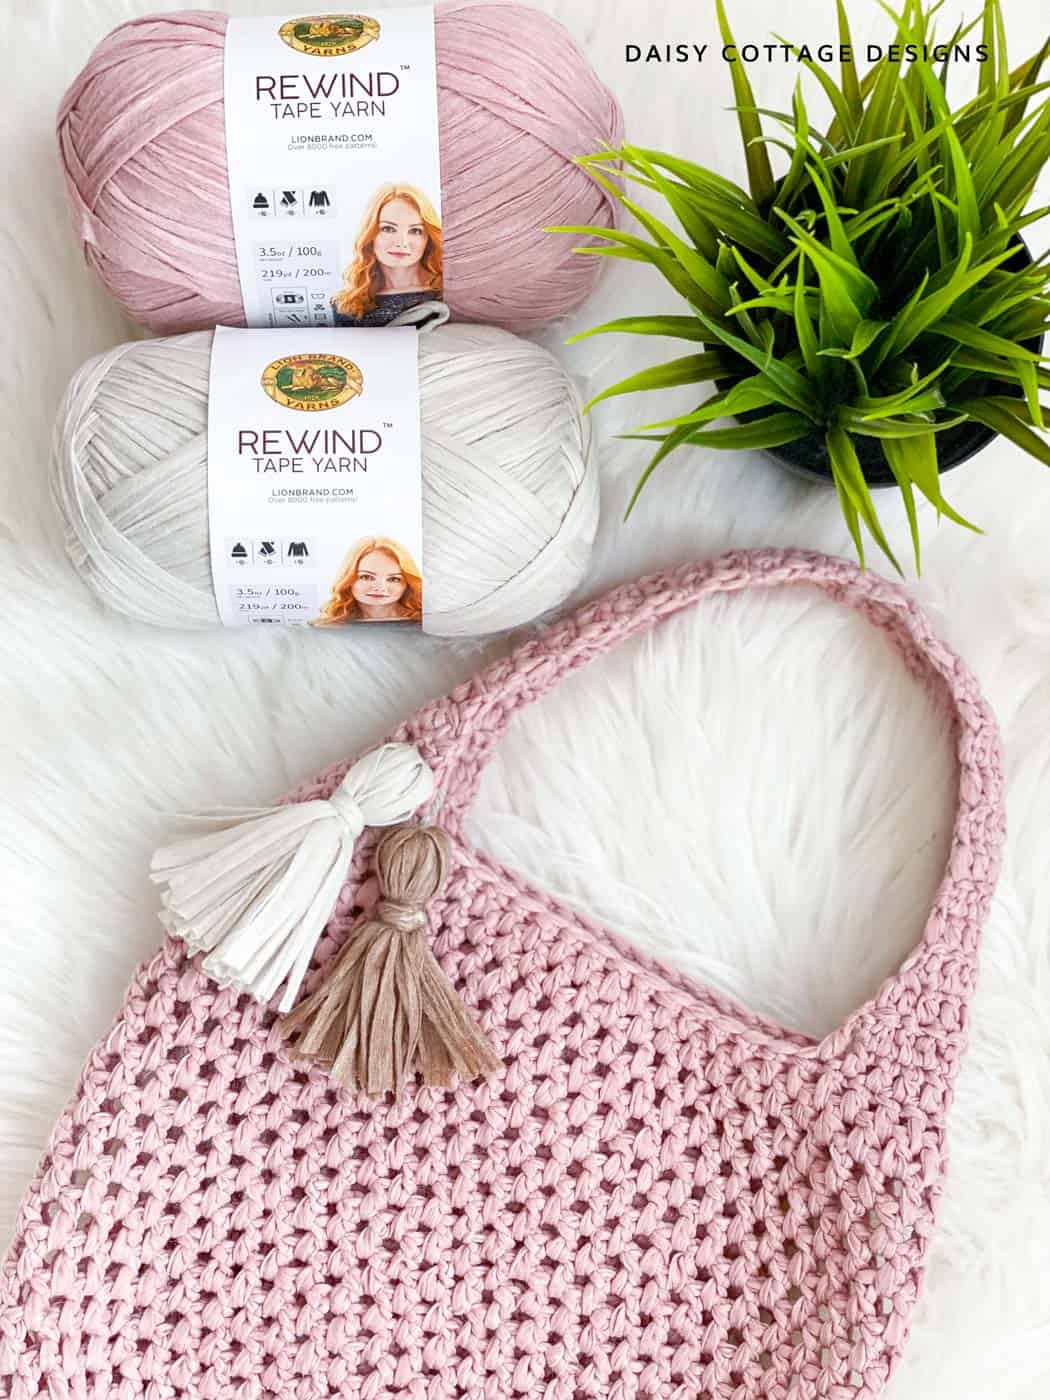 Crocheted Market Bags: Cotton vs. Acrylic 